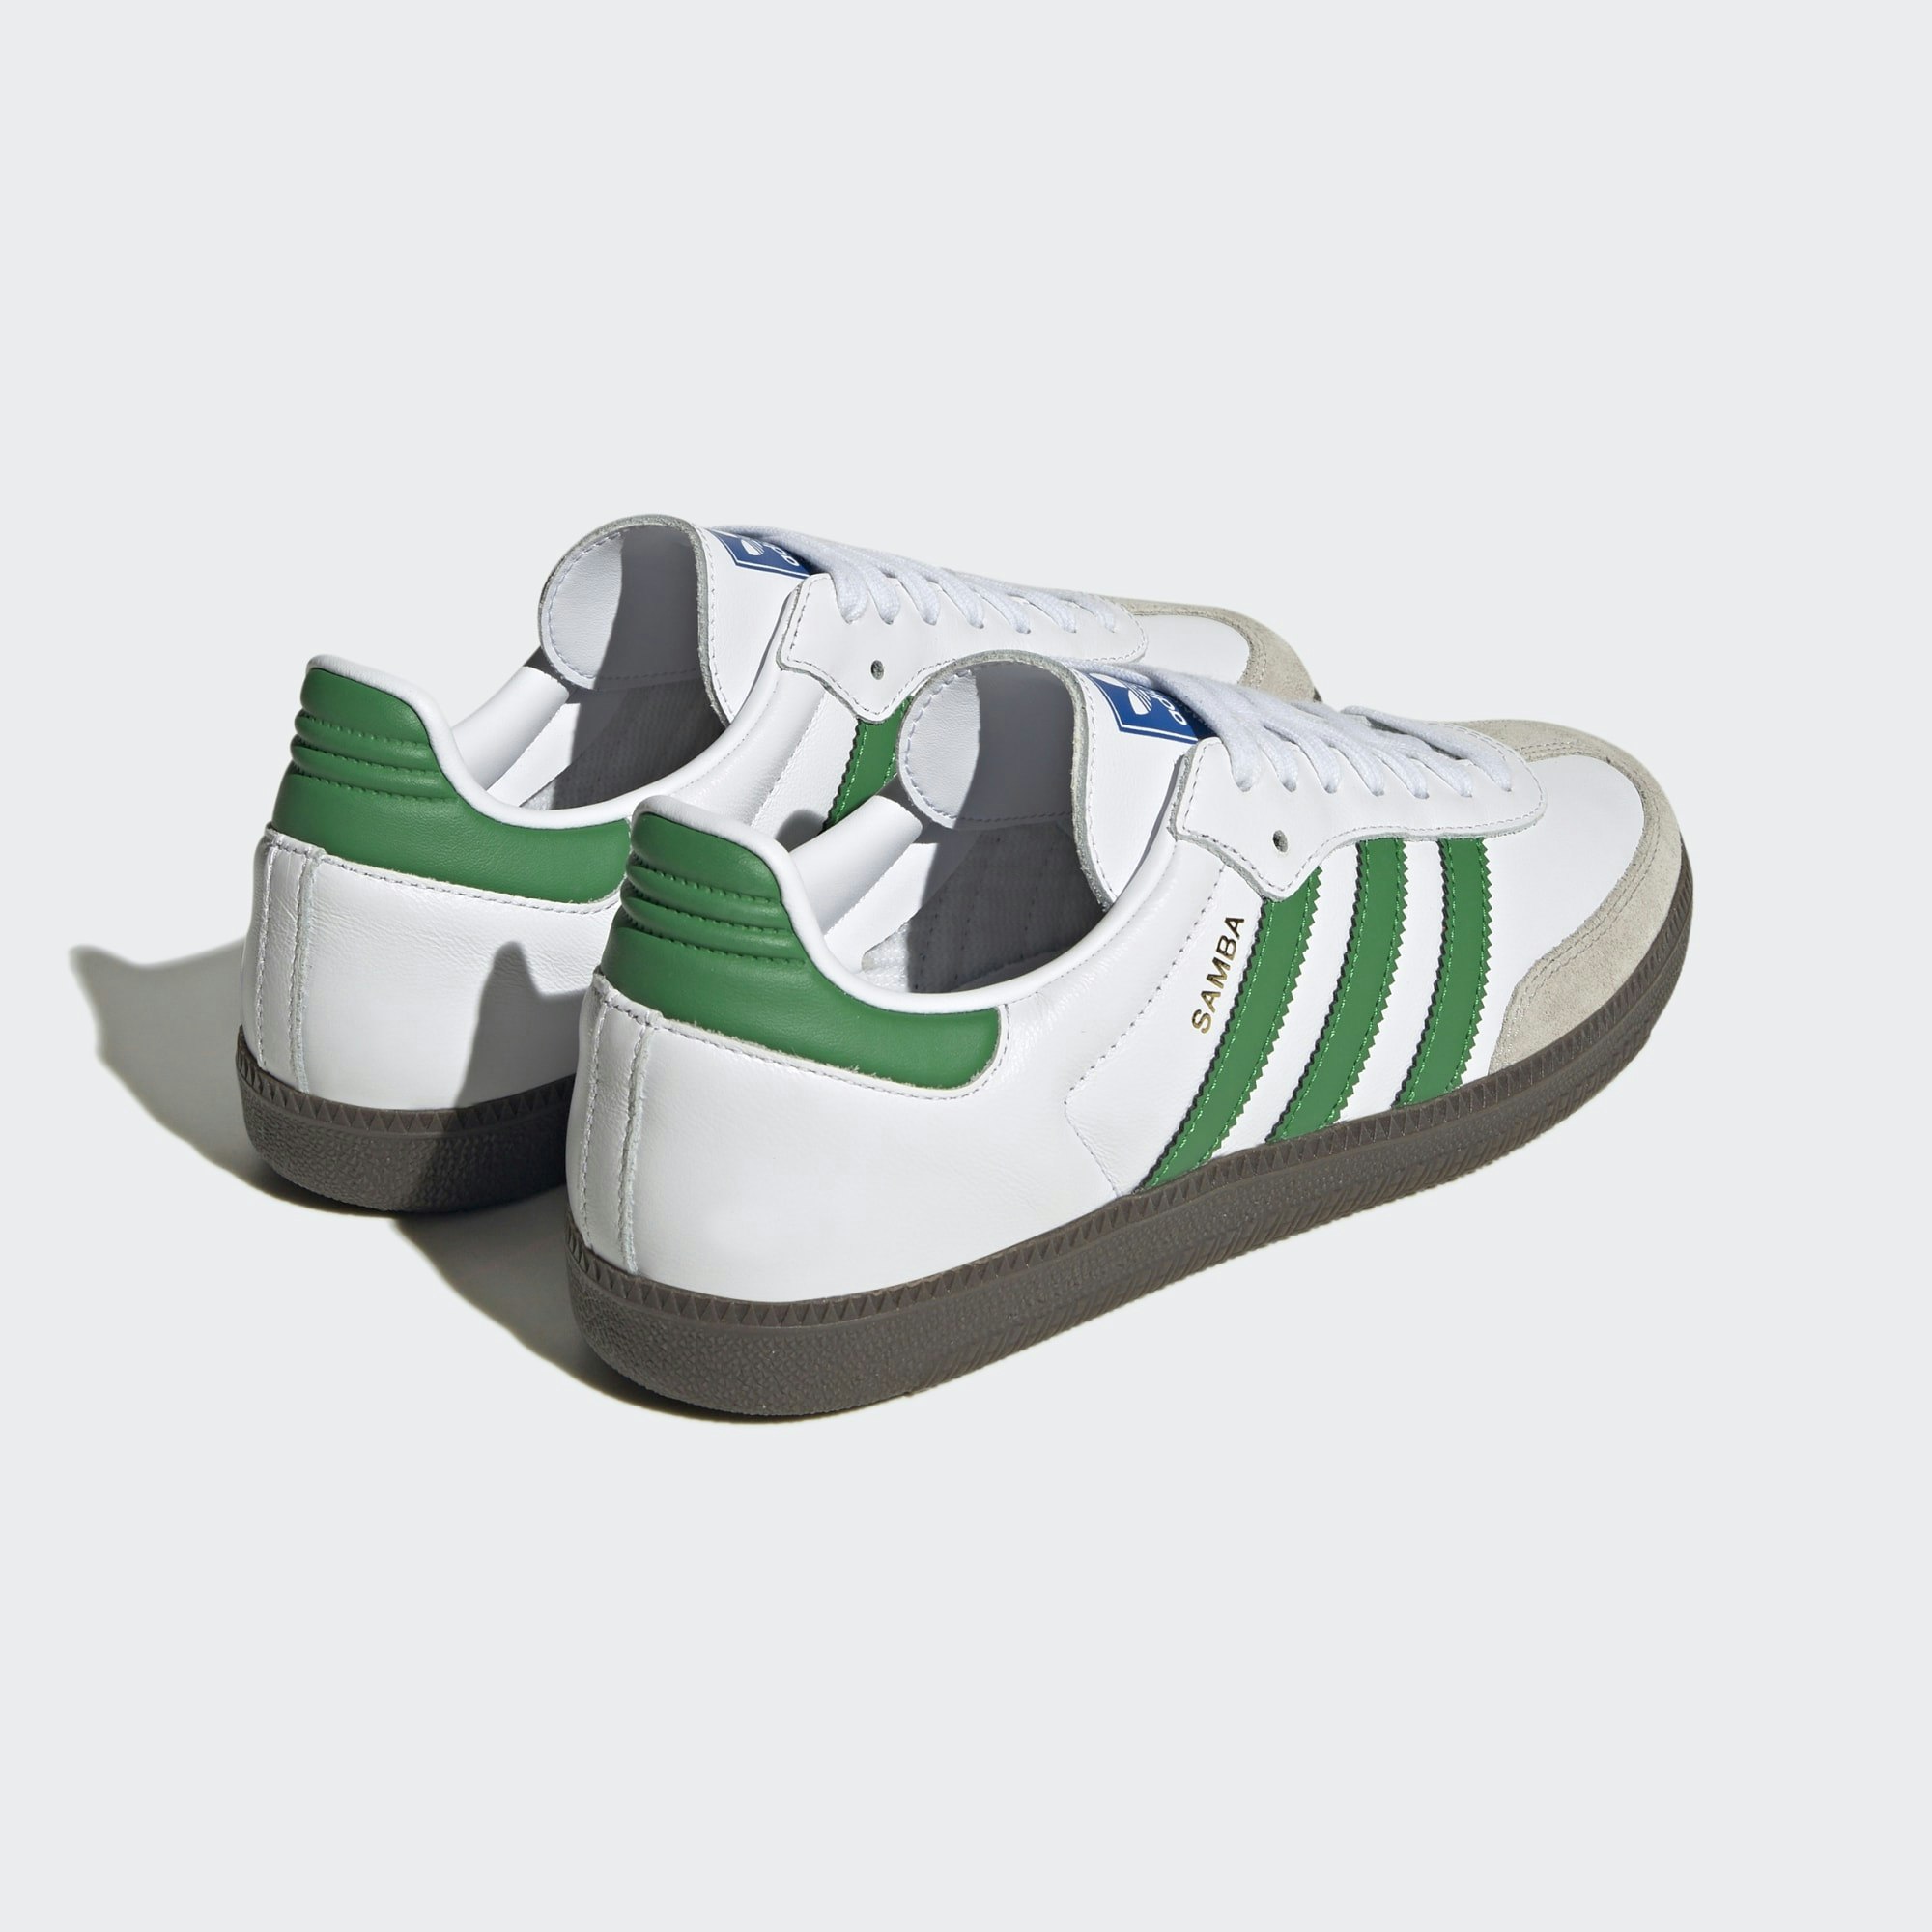 adidas Samba OG "White/Green"